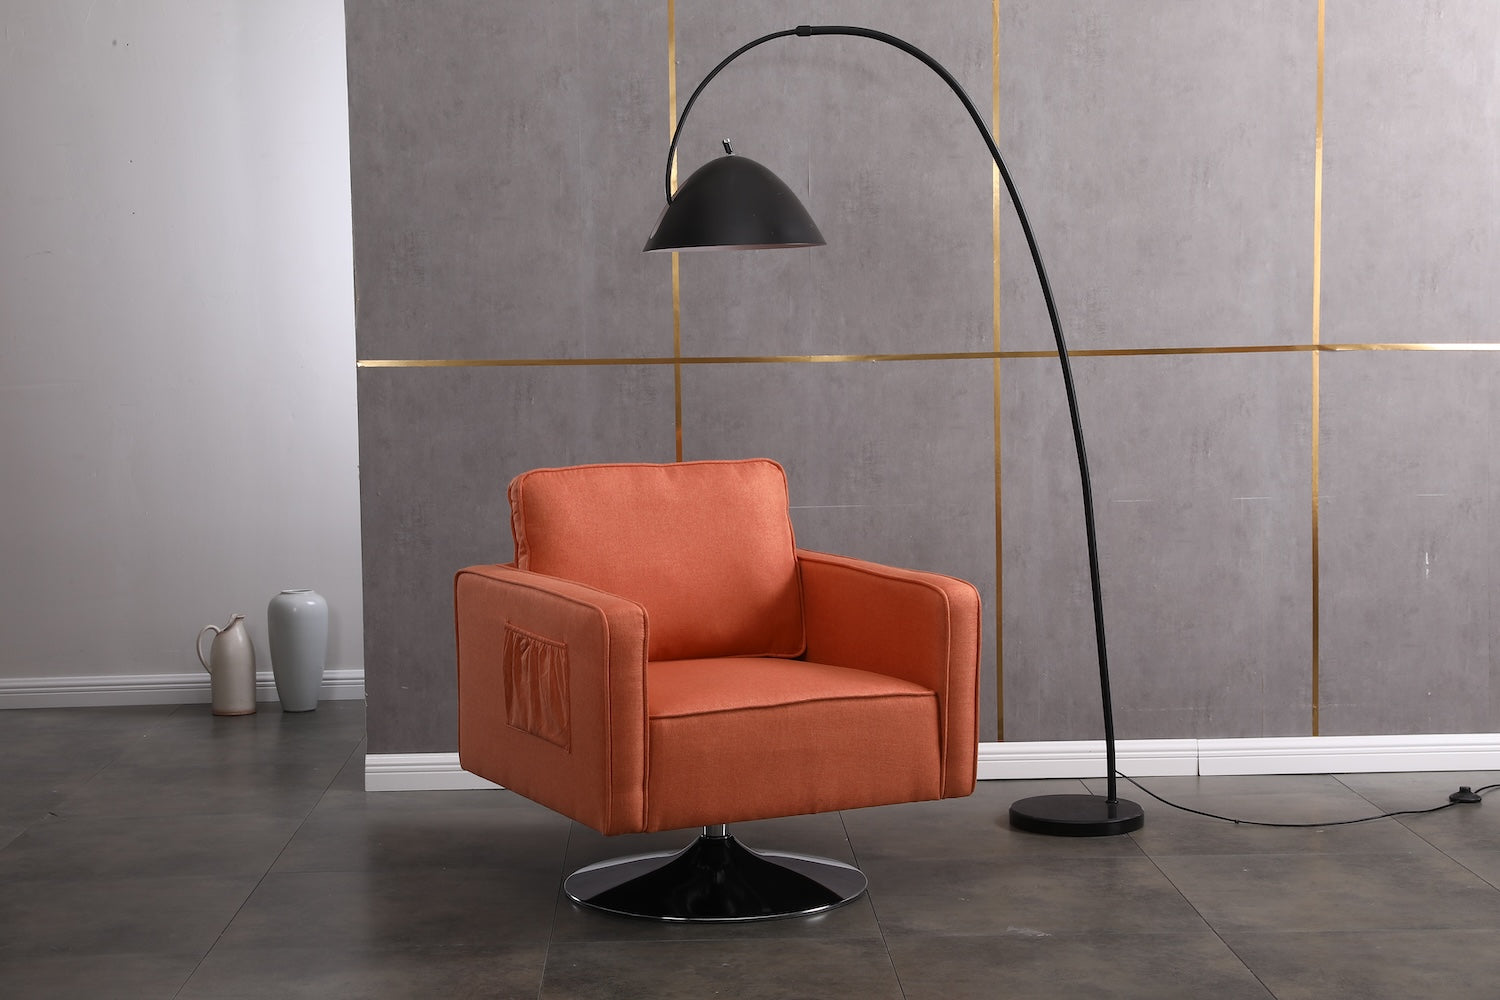 Modern Office Chair Upholstered Cotton&Linen Swivel Task Chair